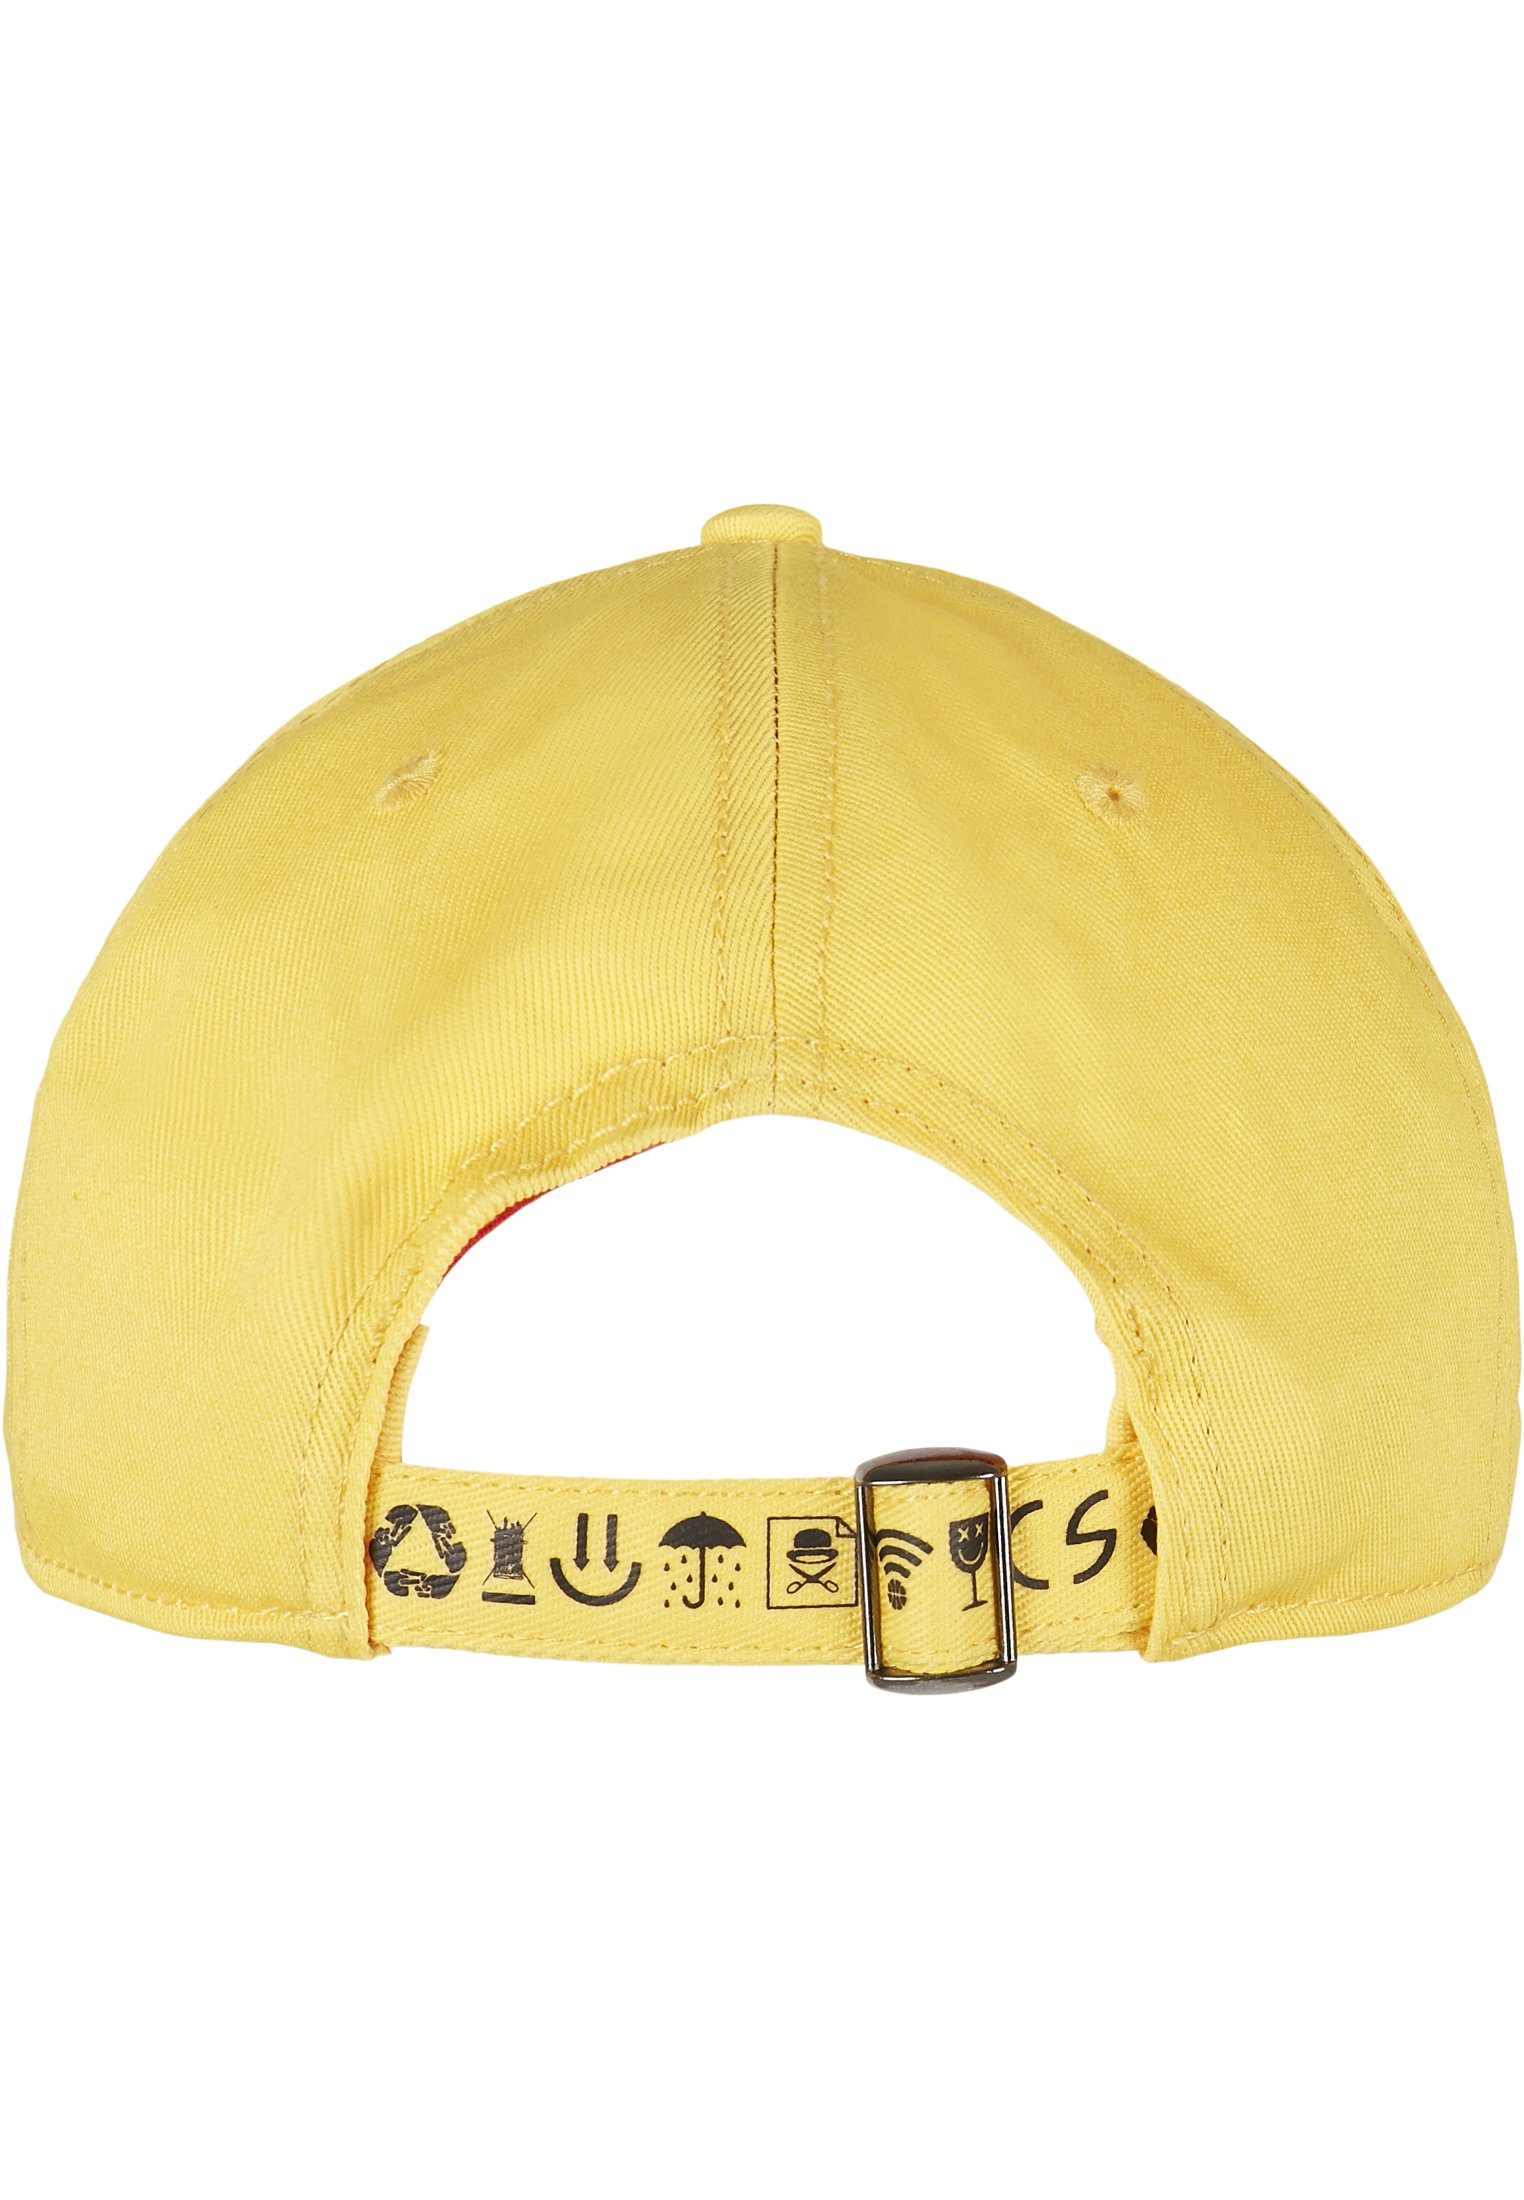 Cap Cap Flex CAYLER Iconic yellow/multicolor SONS & C&S Curved Peace